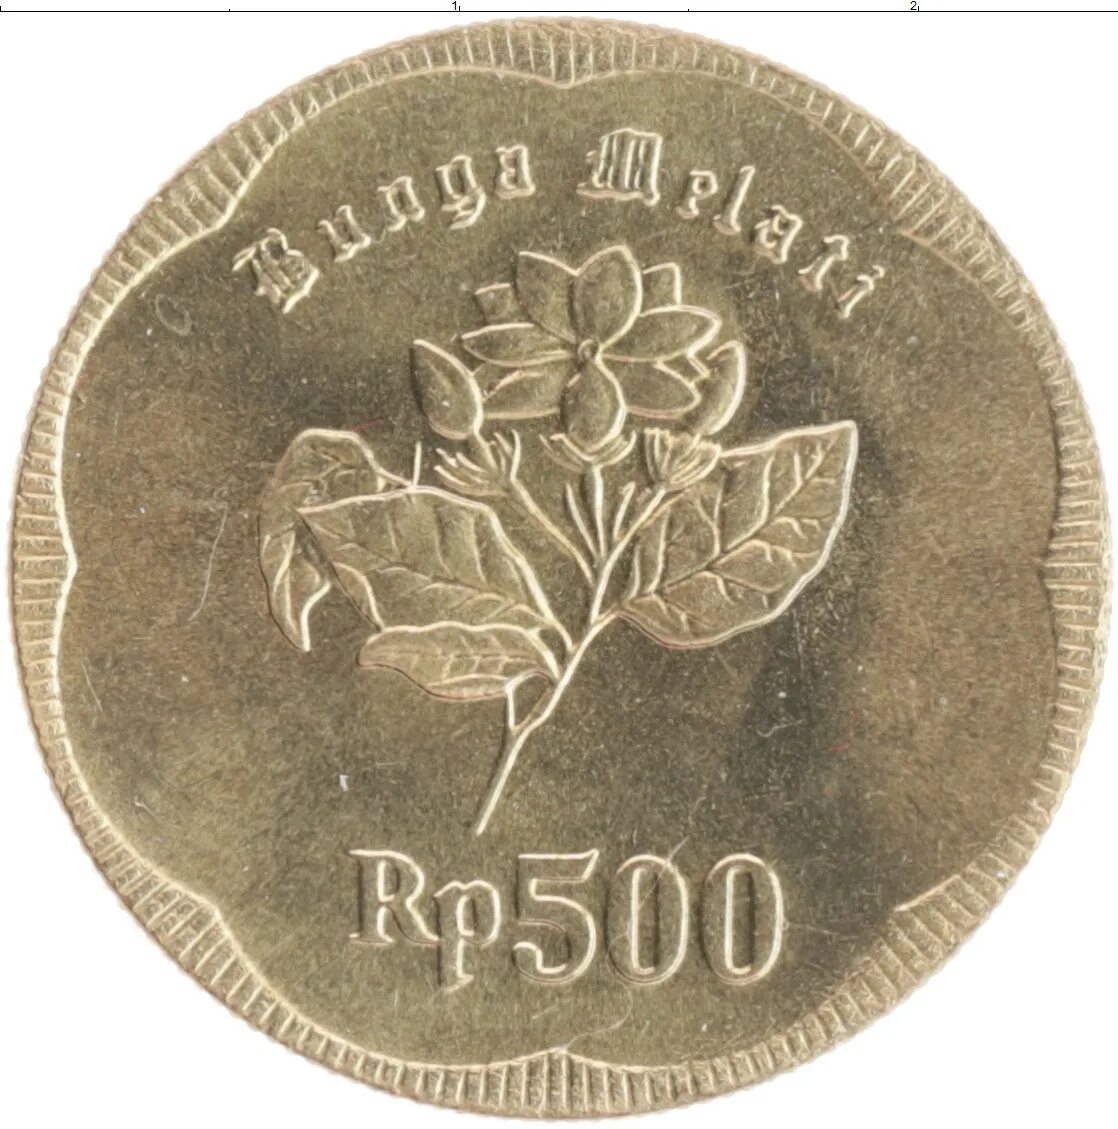 300 рупий в рублях. Индонезийские монеты. 500 Рупий. Монета Индонезия 500 рупий 2016. Индонезийская рупия знак.